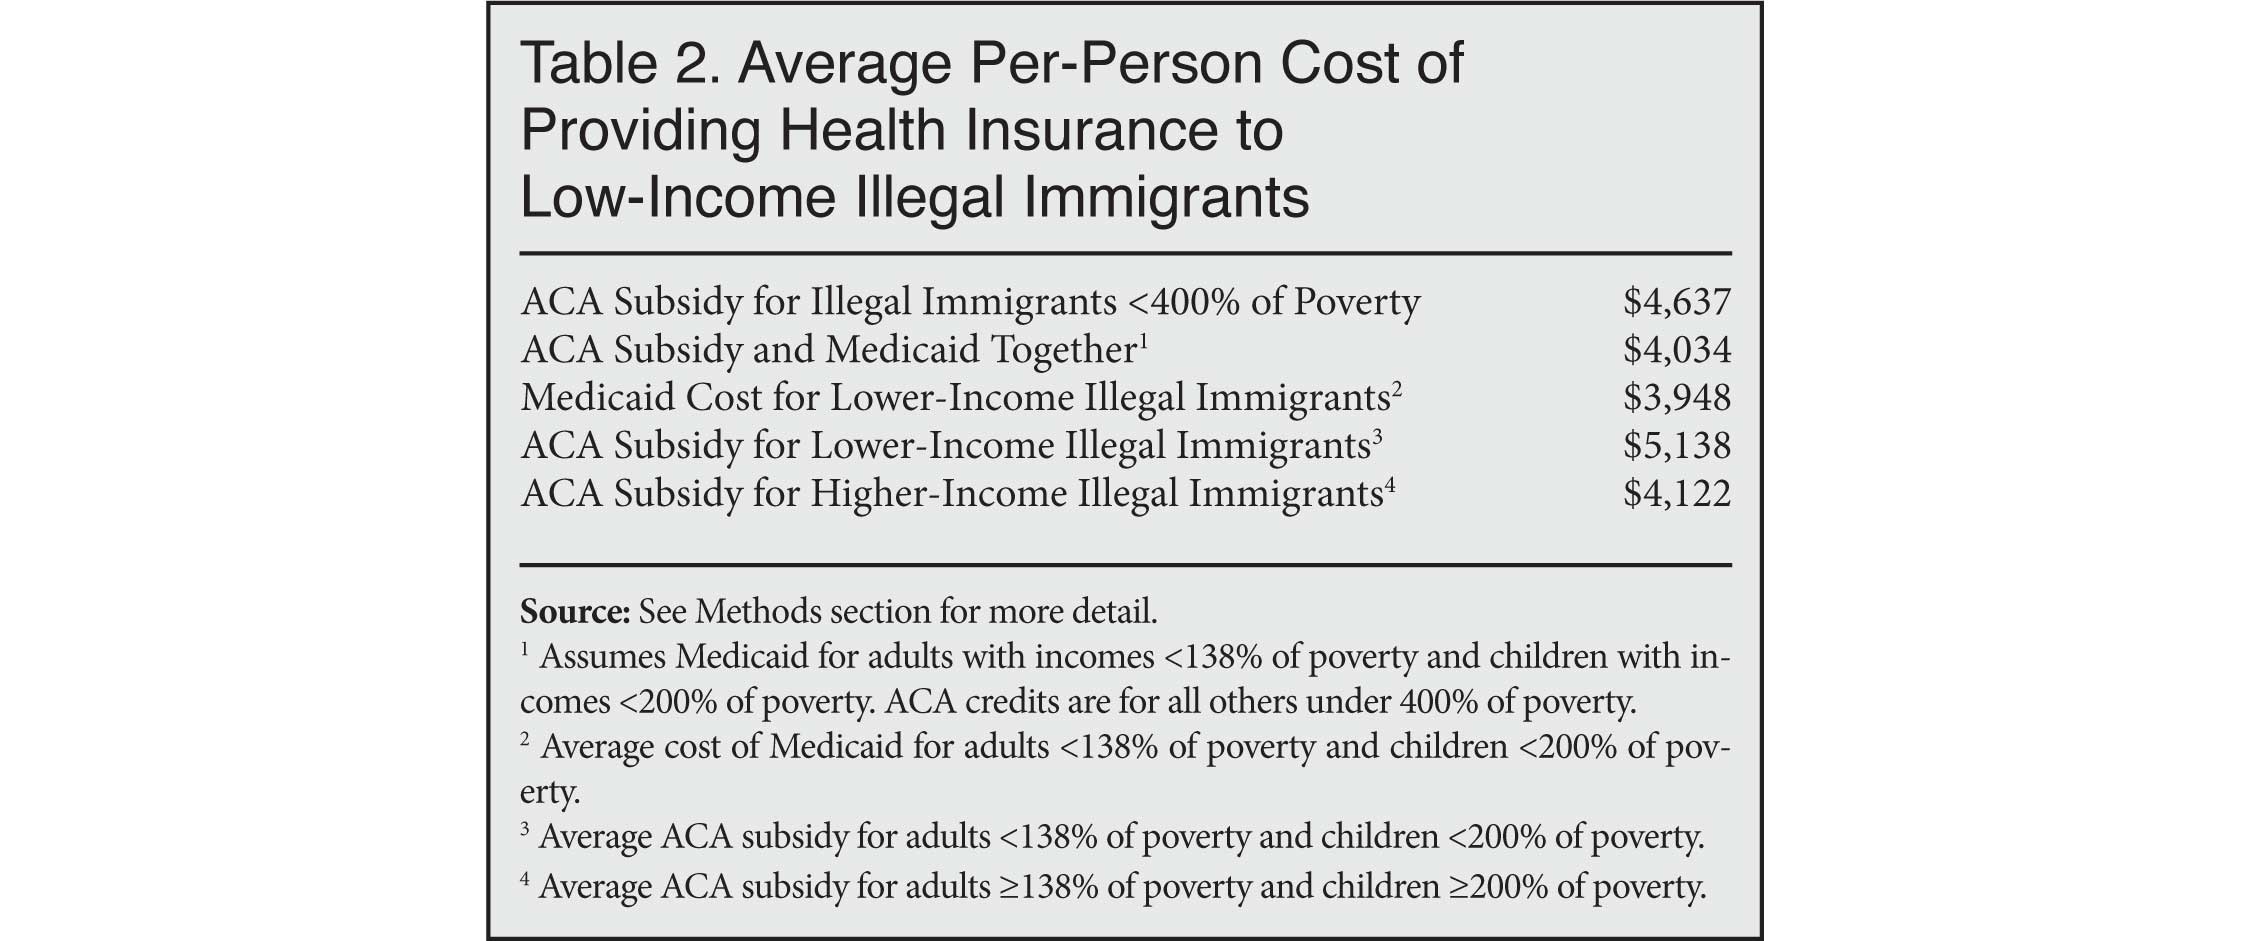 Table: Average Per-Person Cost of Providing Health Insurance to Low-income Illegal Immigrants